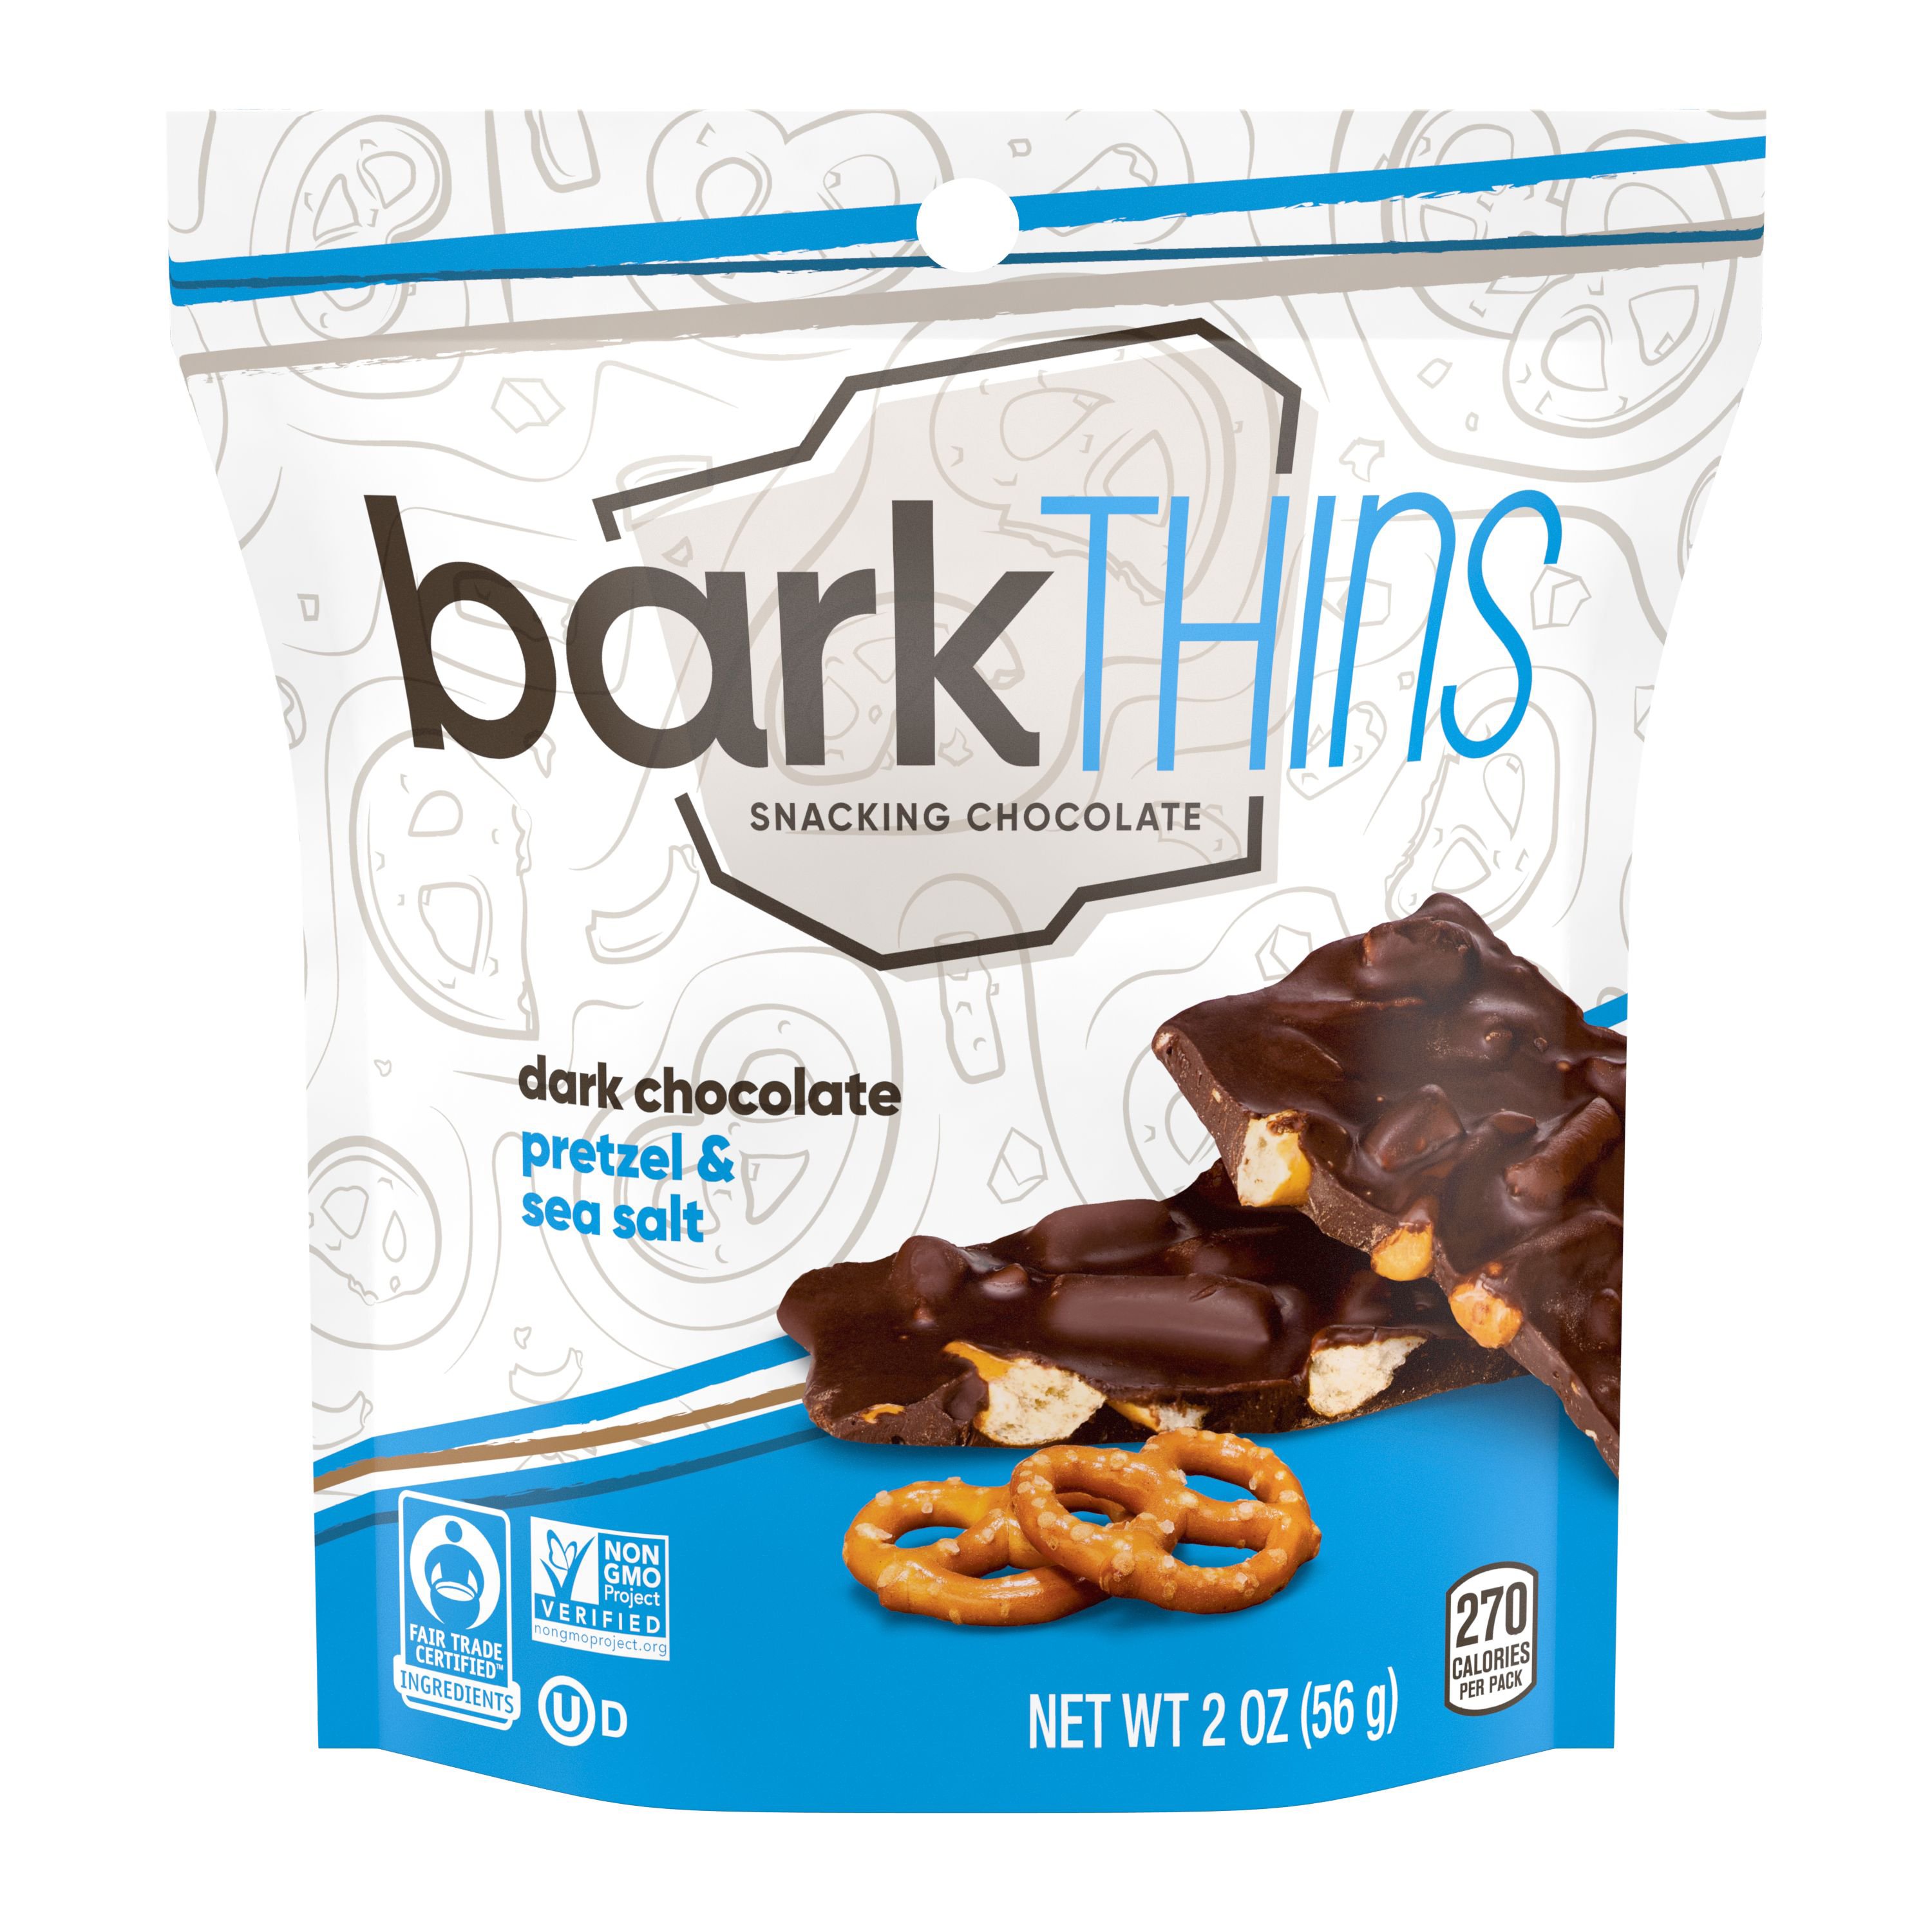 Is it Dairy Free Barkthins Snacking Chocolate Dark Chocolate